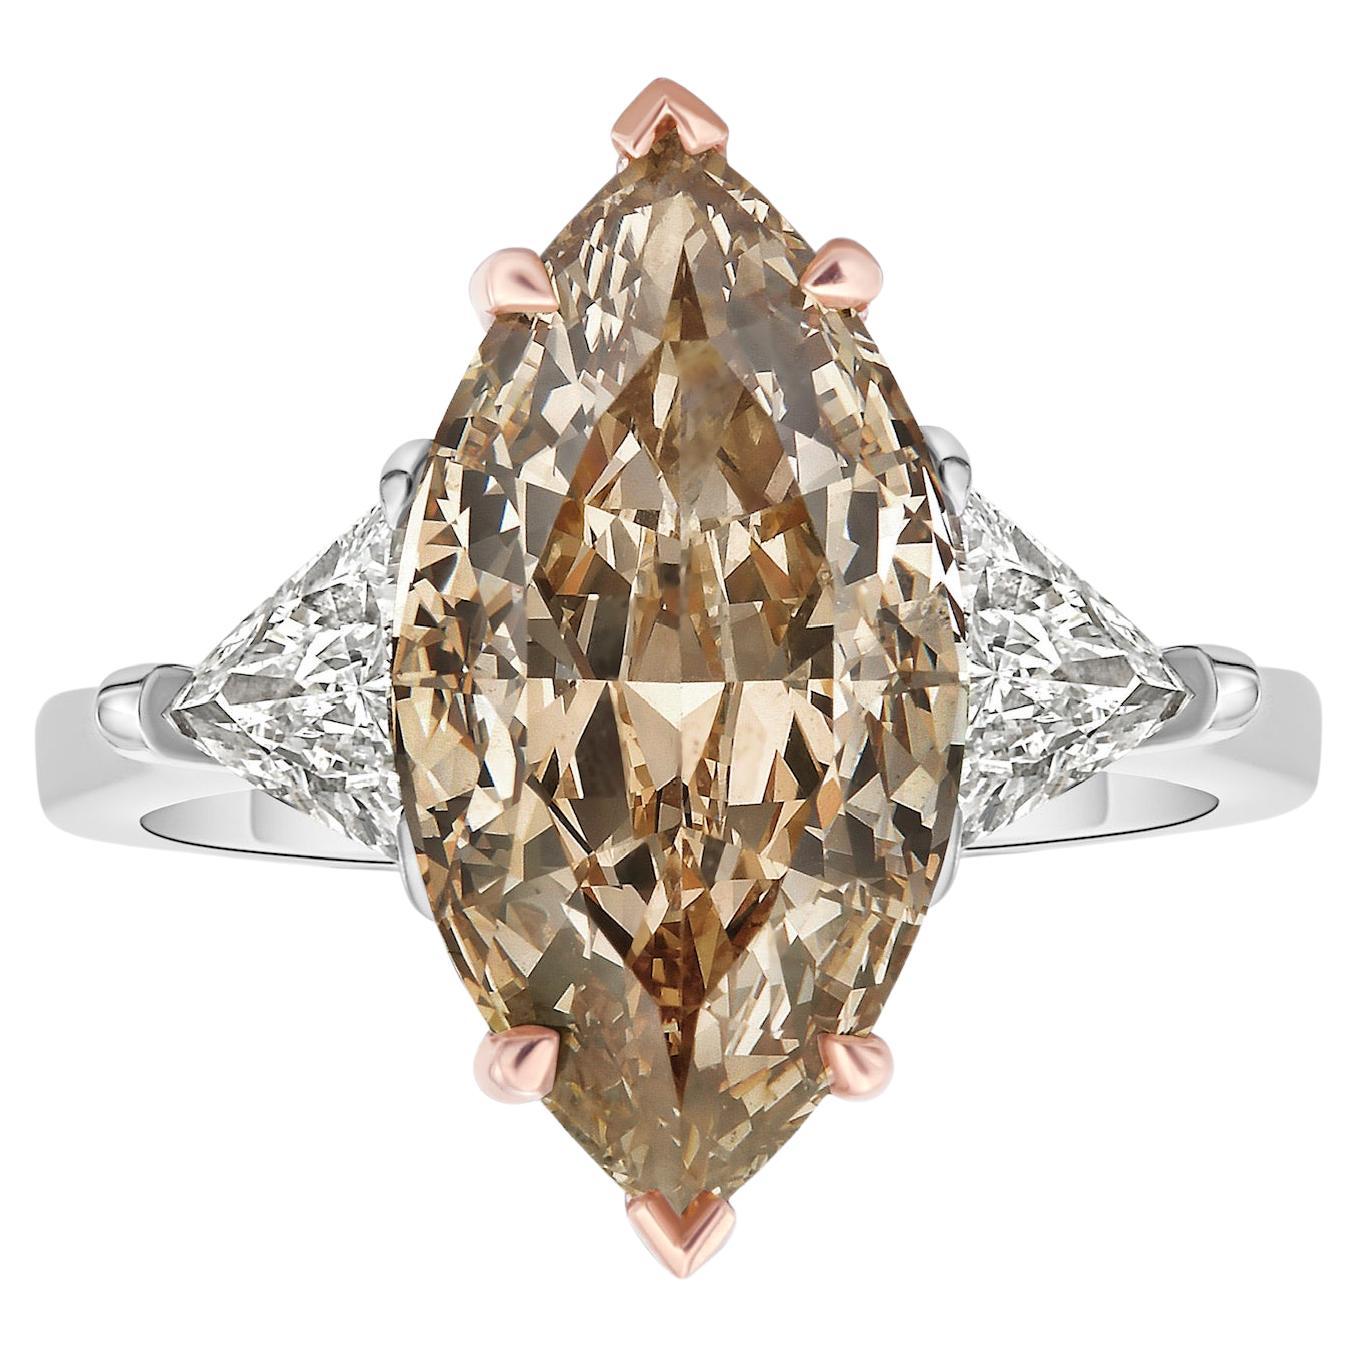 5 Carat Marquise Cut Fancy Yellow Brown Diamond Ring